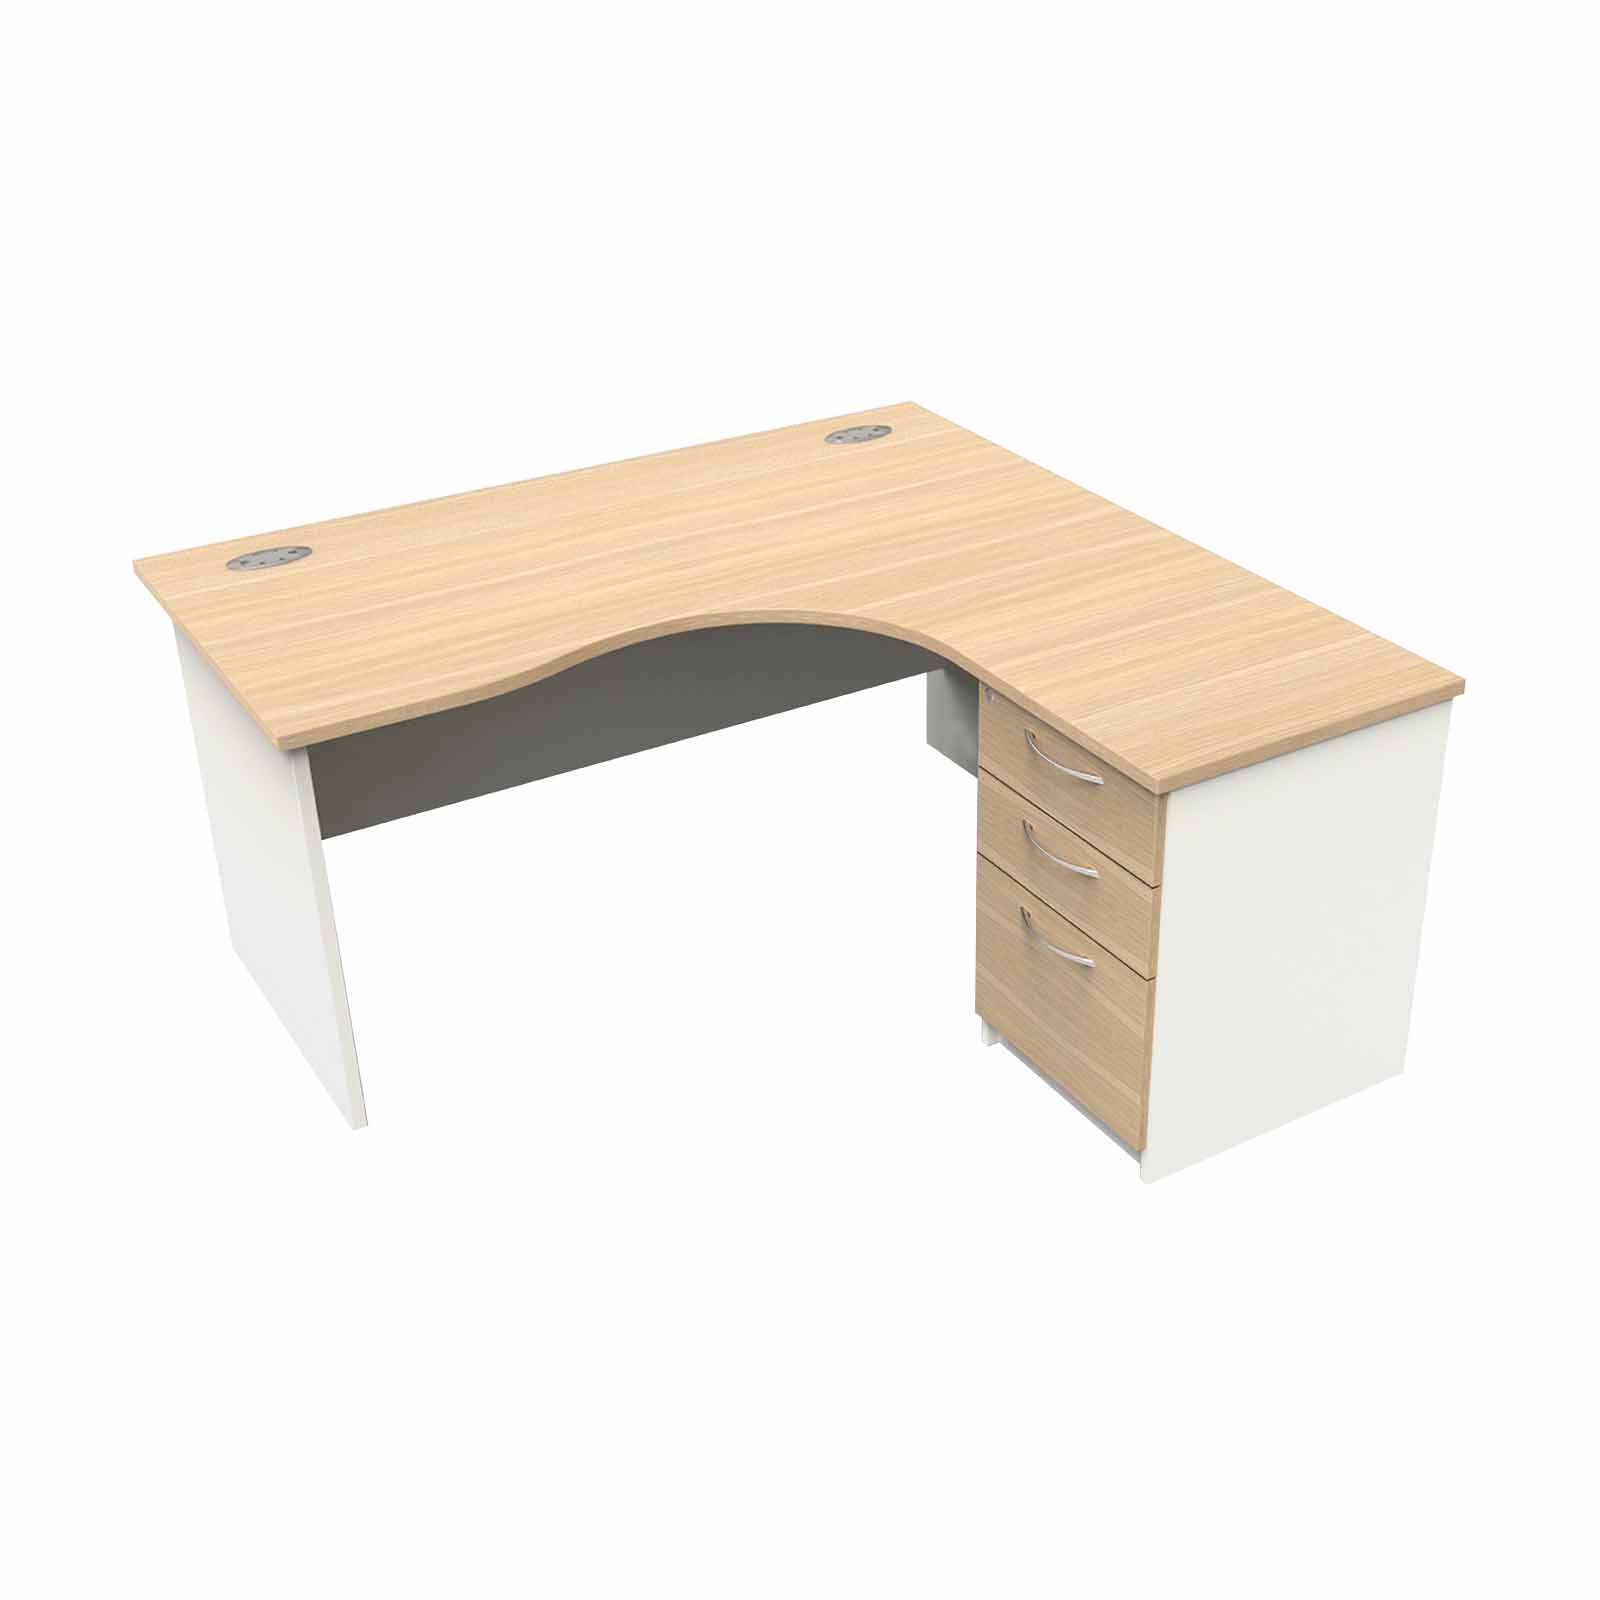 MADE TO ORDER Crescent panel end desk with pedestal